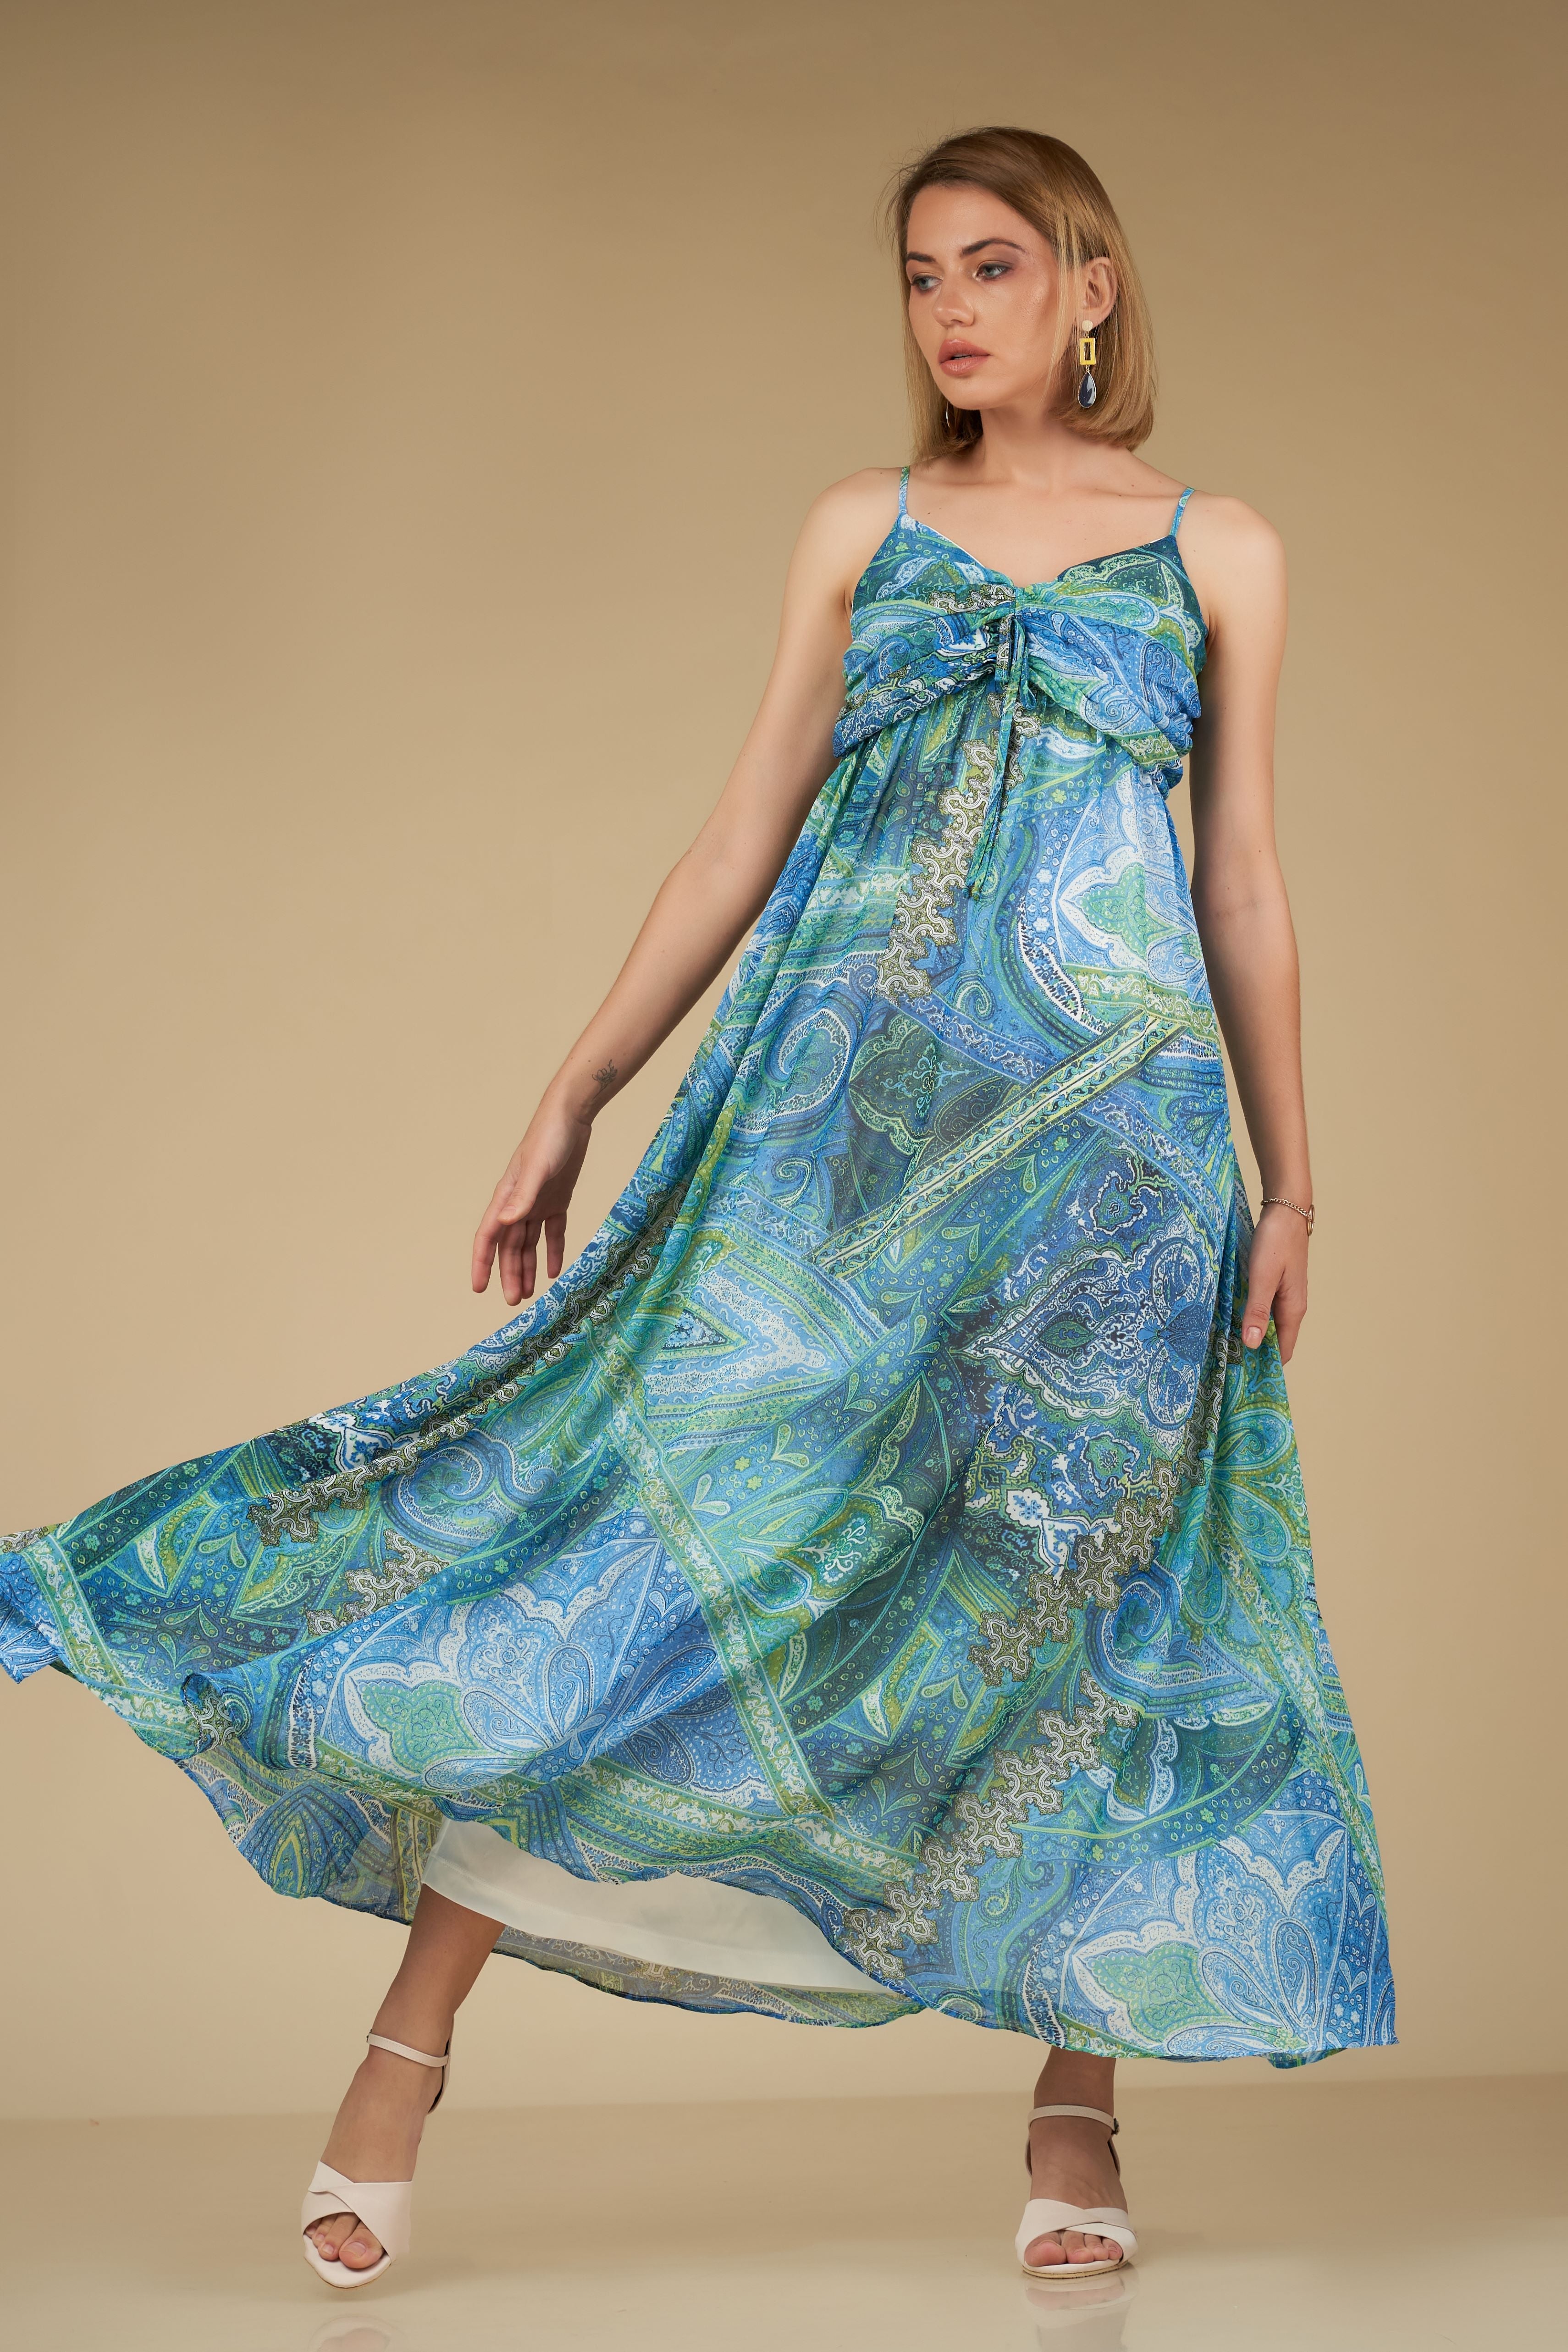 Kylie sheer dress - Avirate Sri Lanka